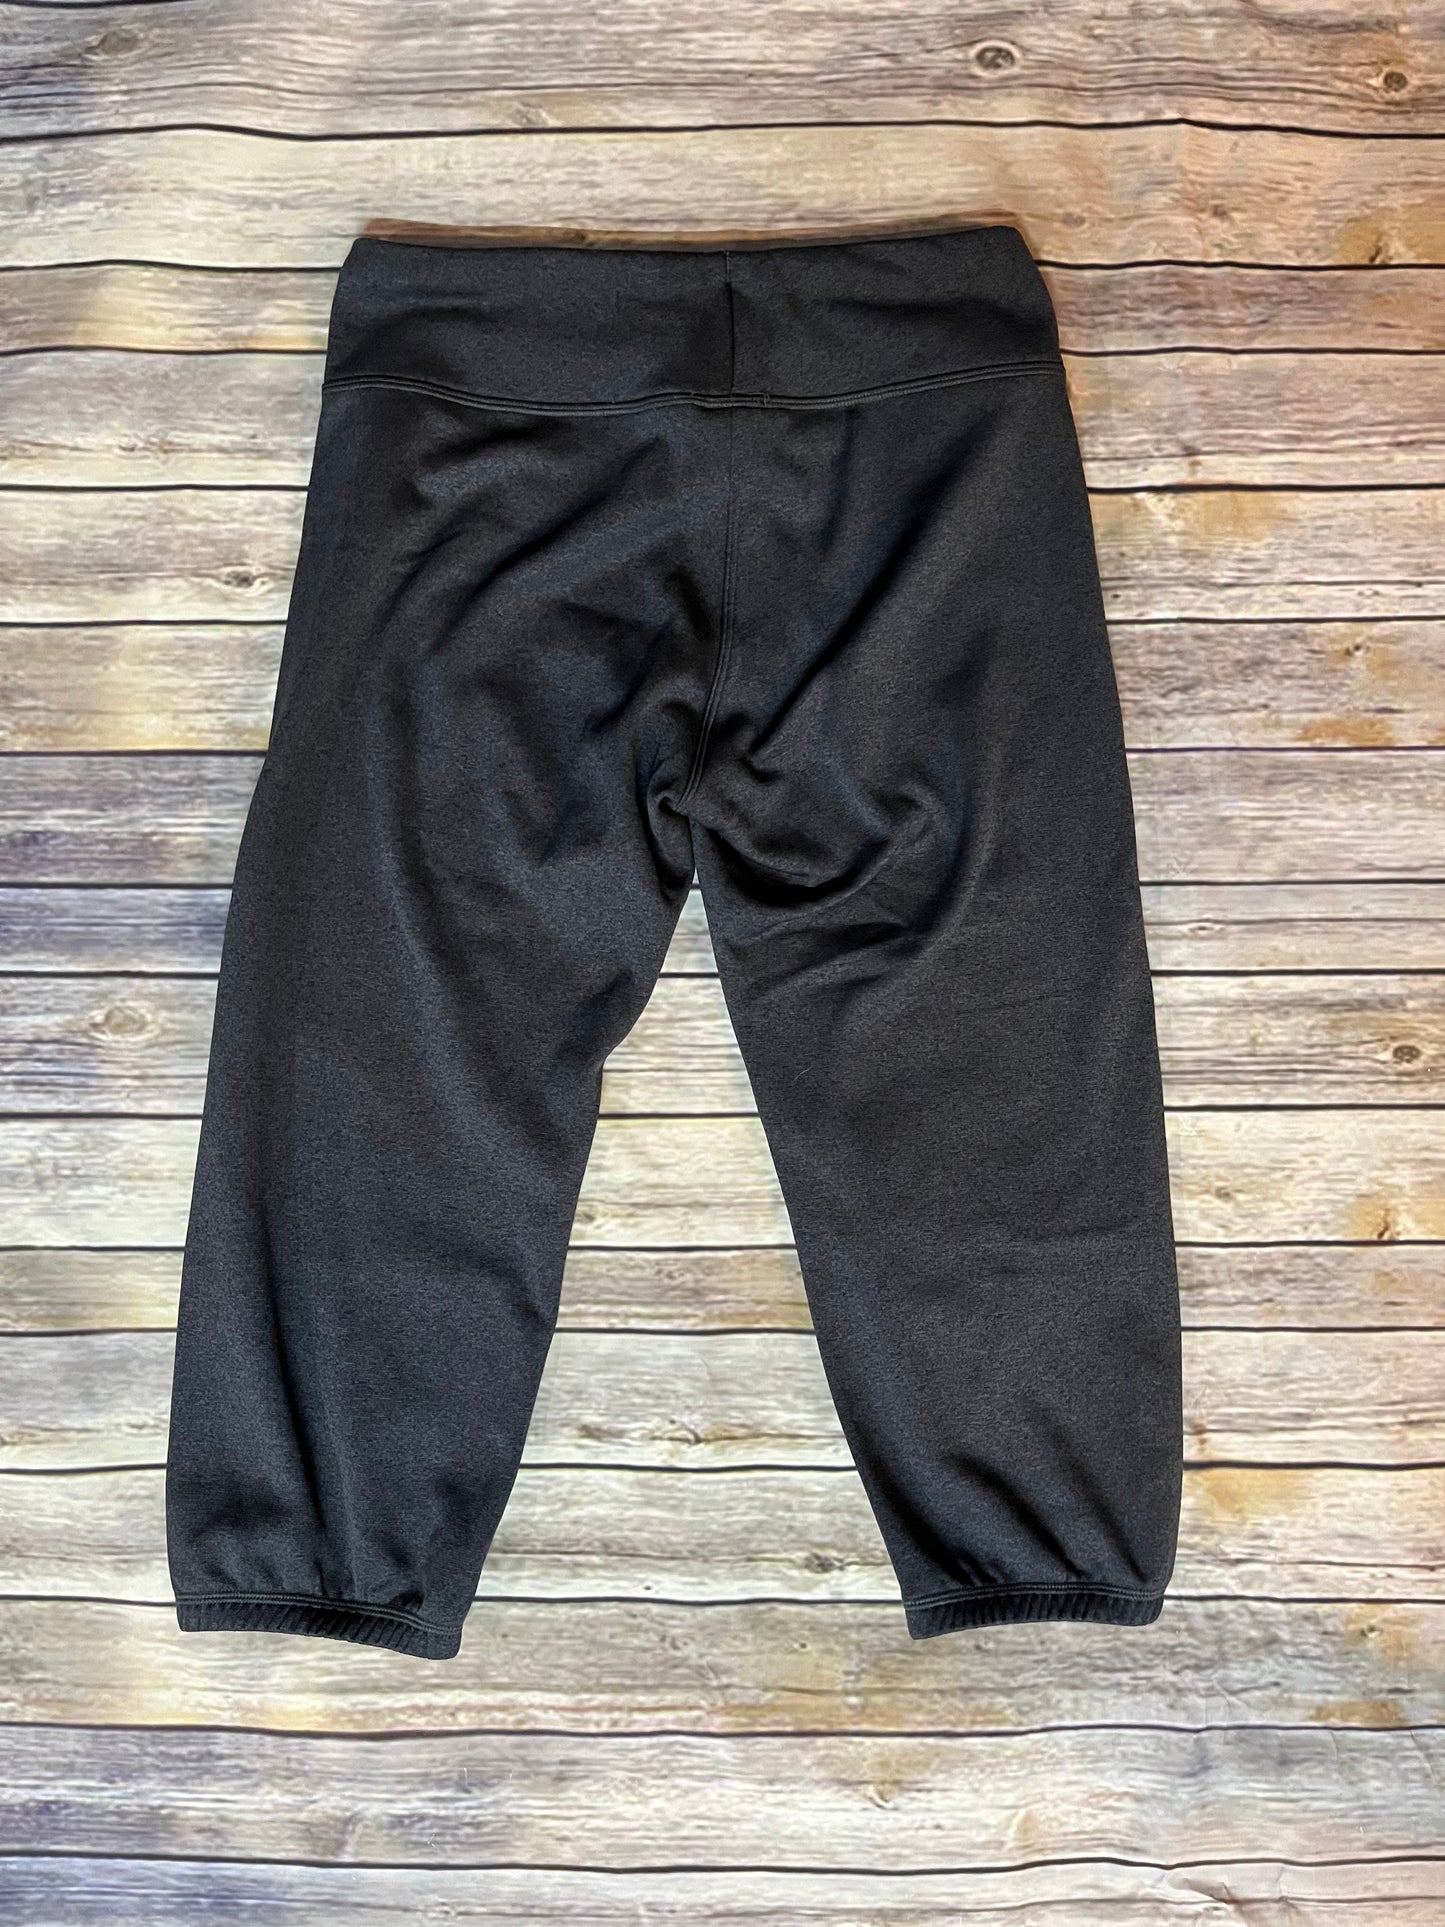 North Face Crop Pants (Small) PPU 45230